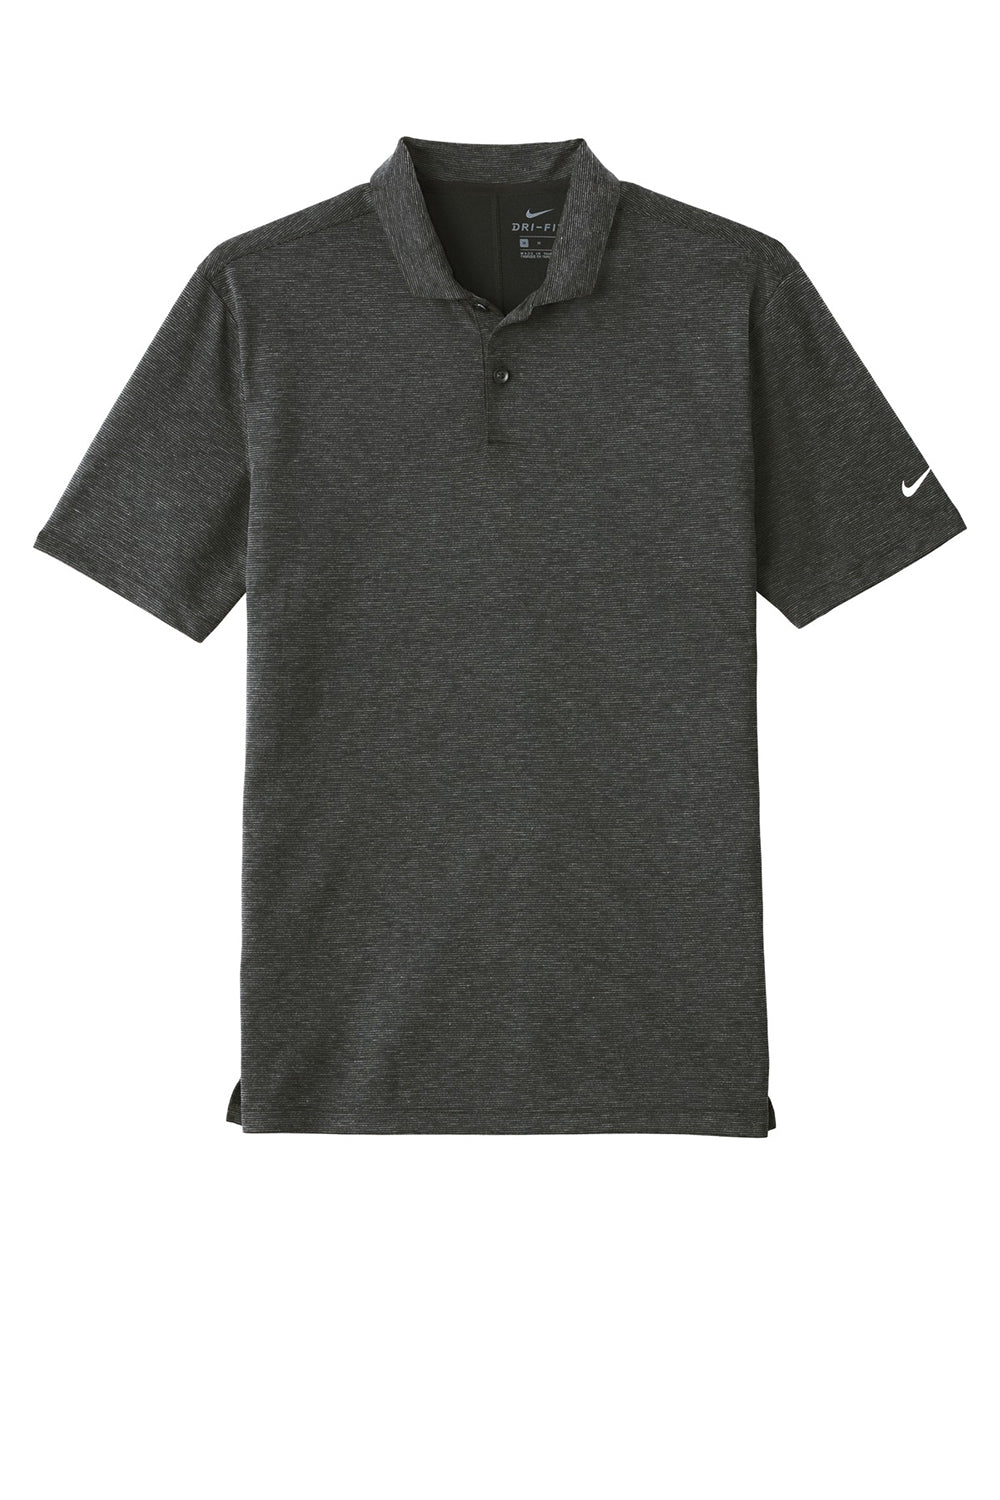 Nike NKAA1854 Mens Prime Dri-Fit Moisture Wicking Short Sleeve Polo Shirt Black Flat Front